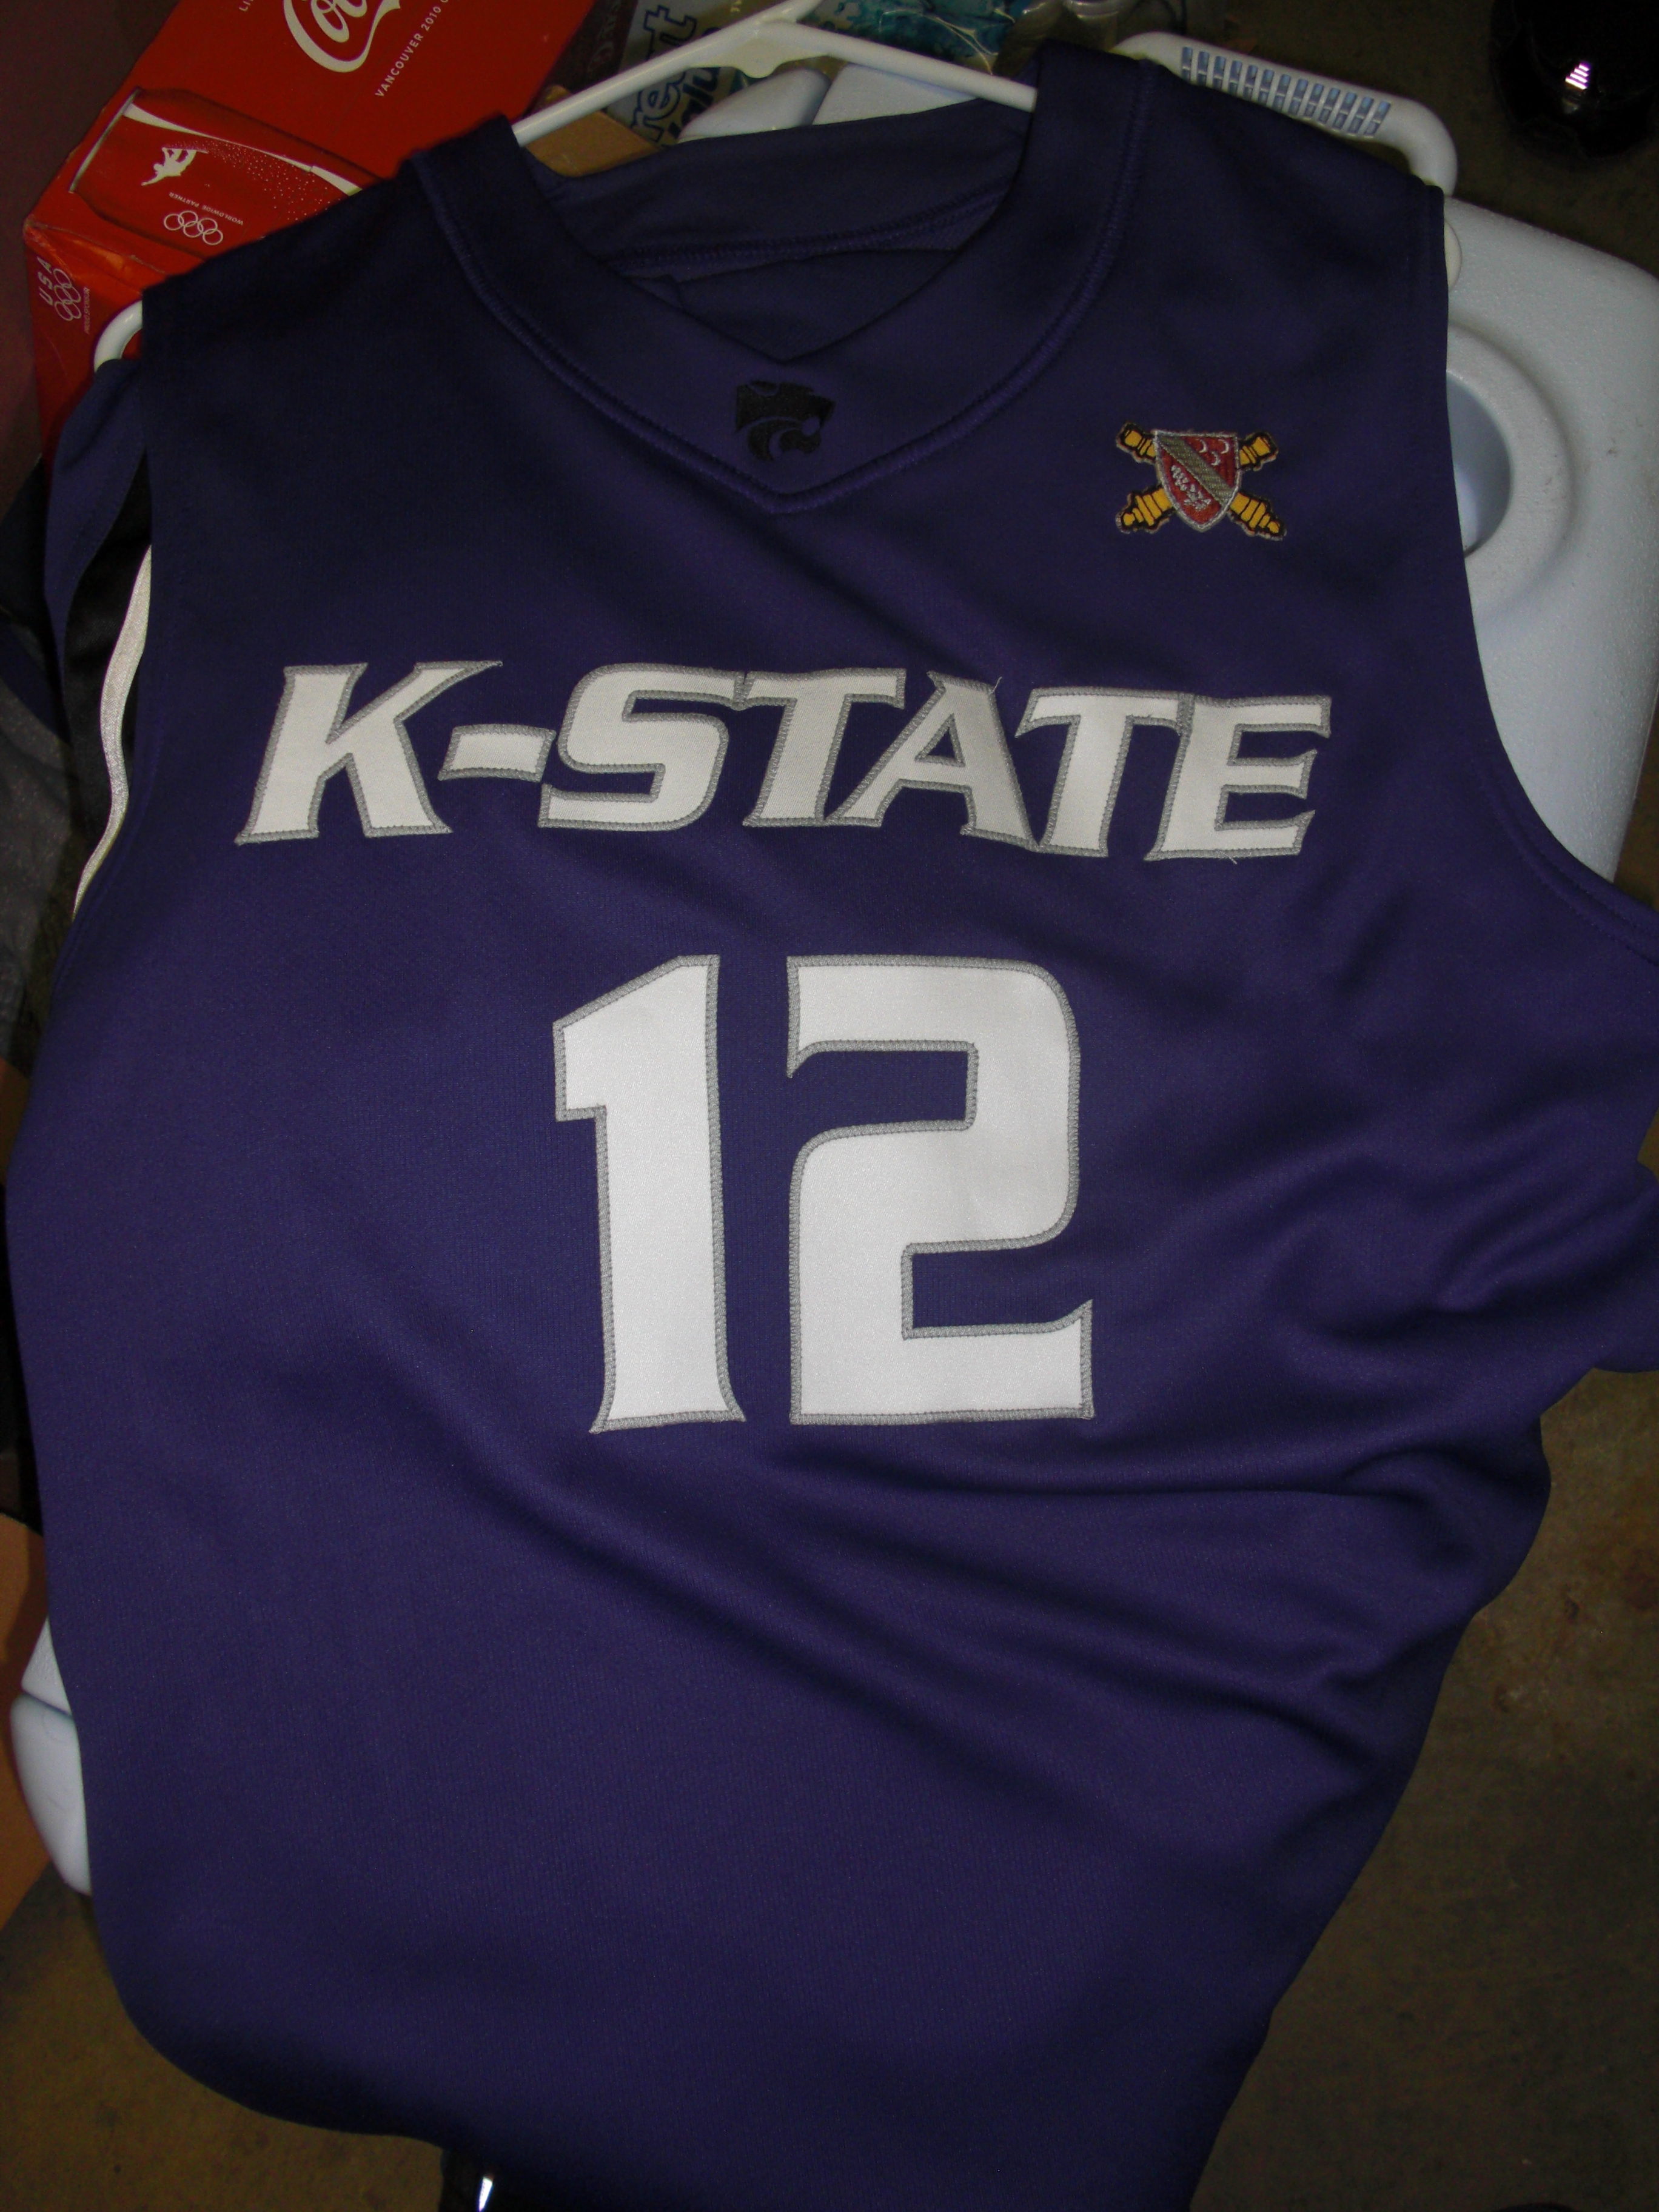 k state throwback basketball jersey